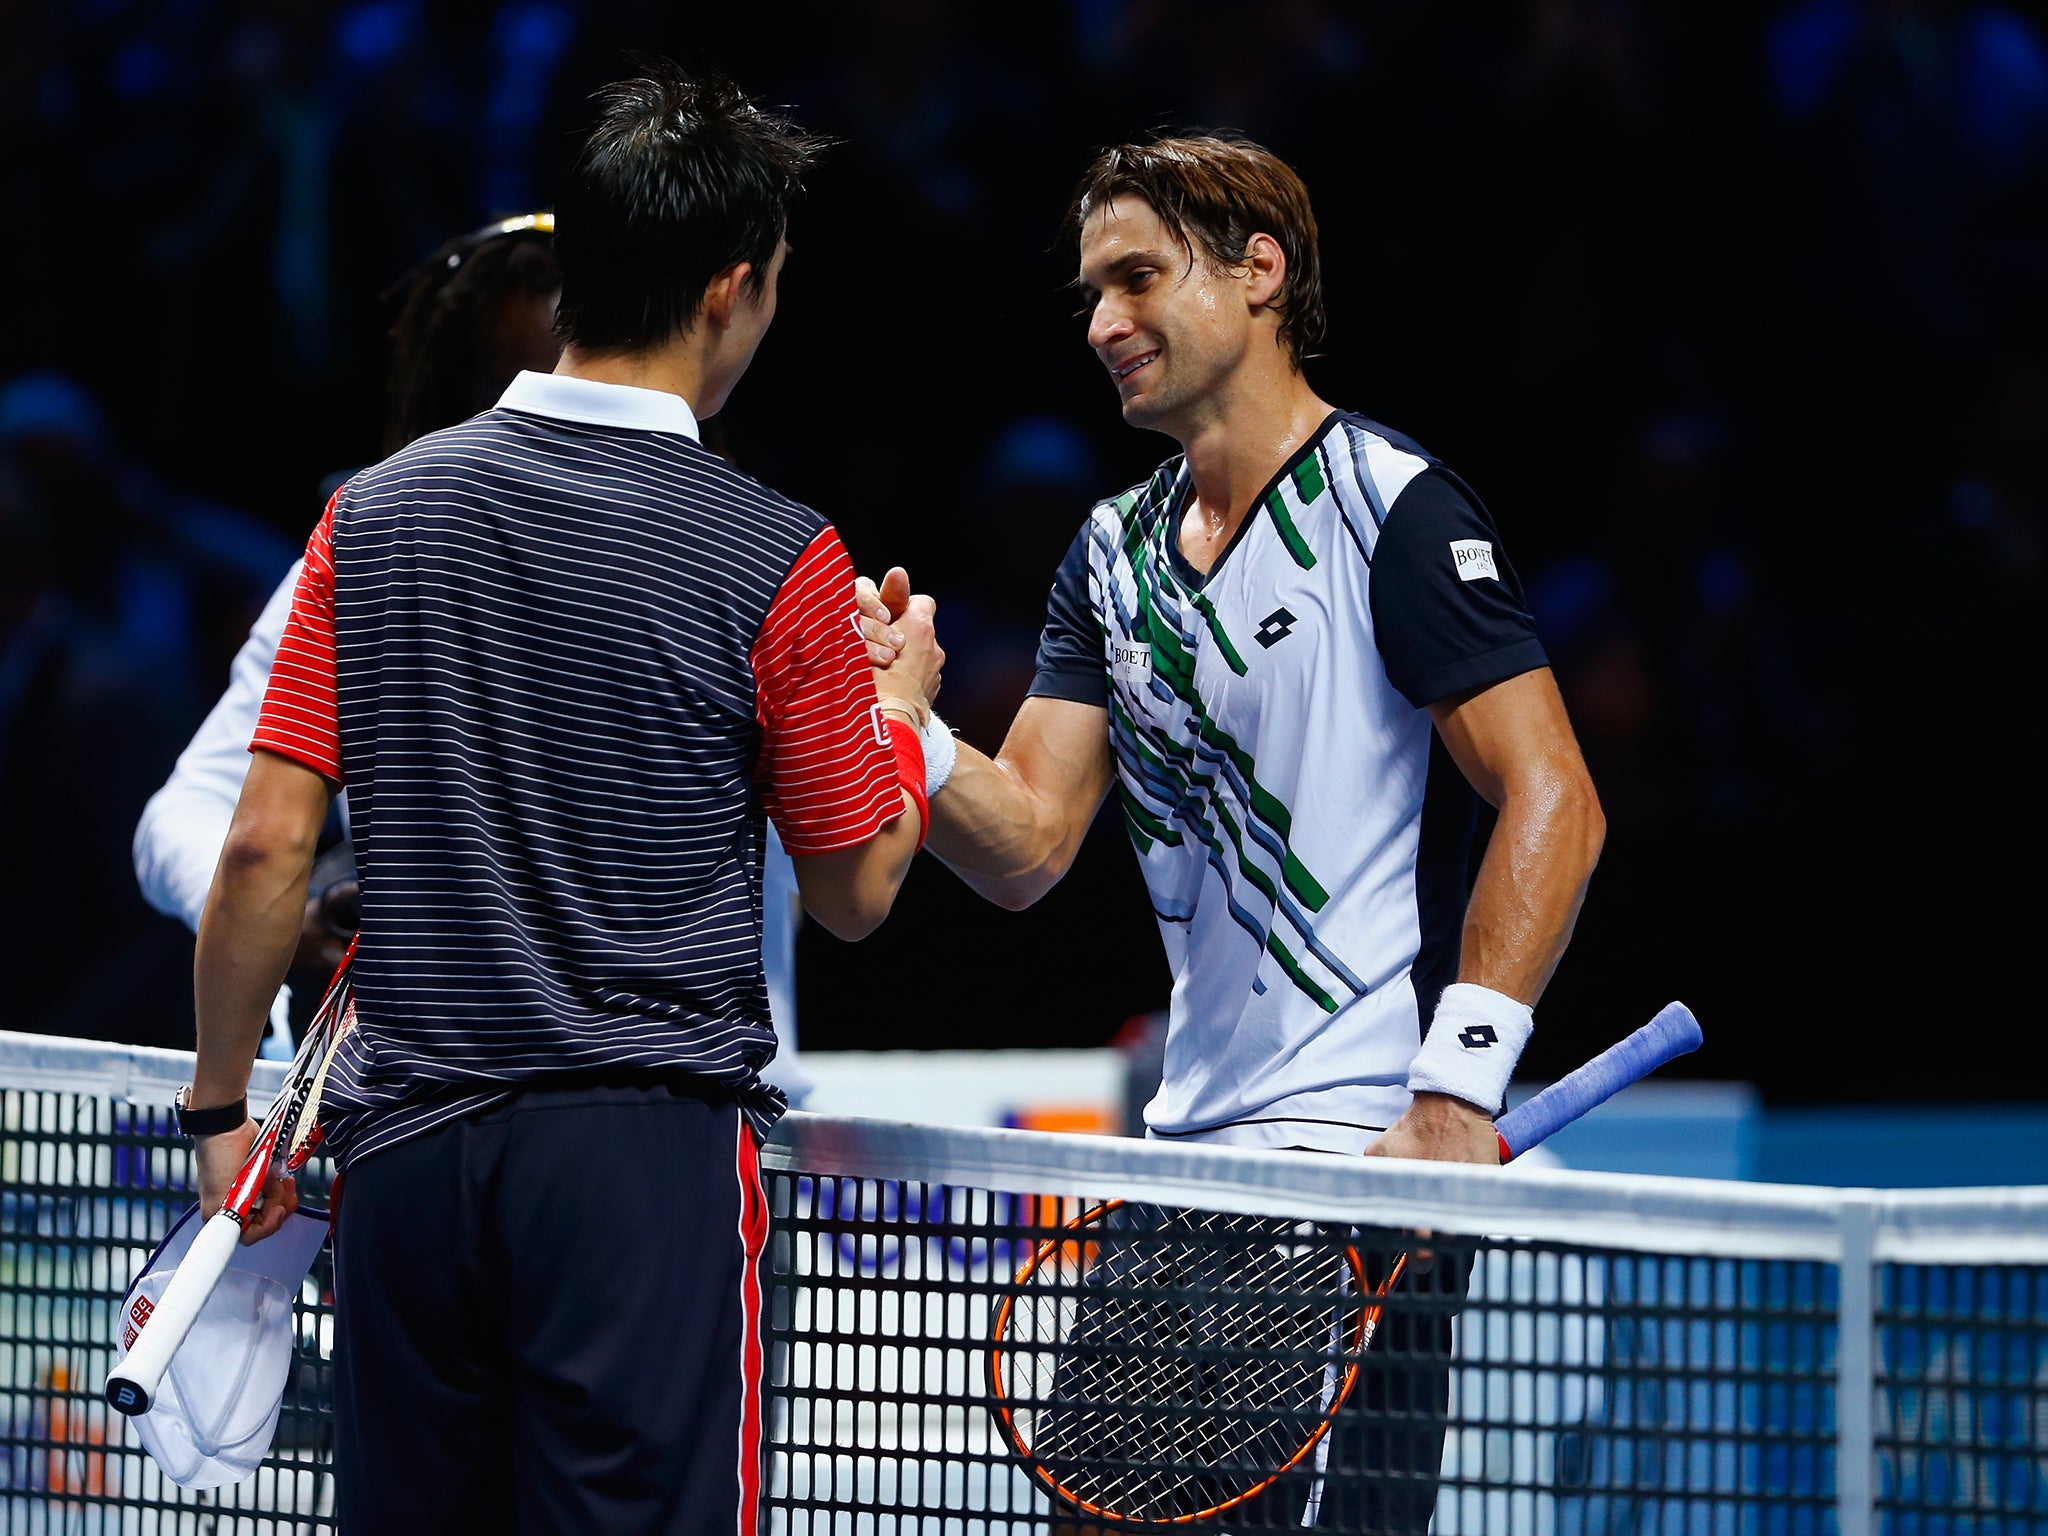 Kei Nishikori of Japan is congratulated on winning the round robin singles match by David Ferrer